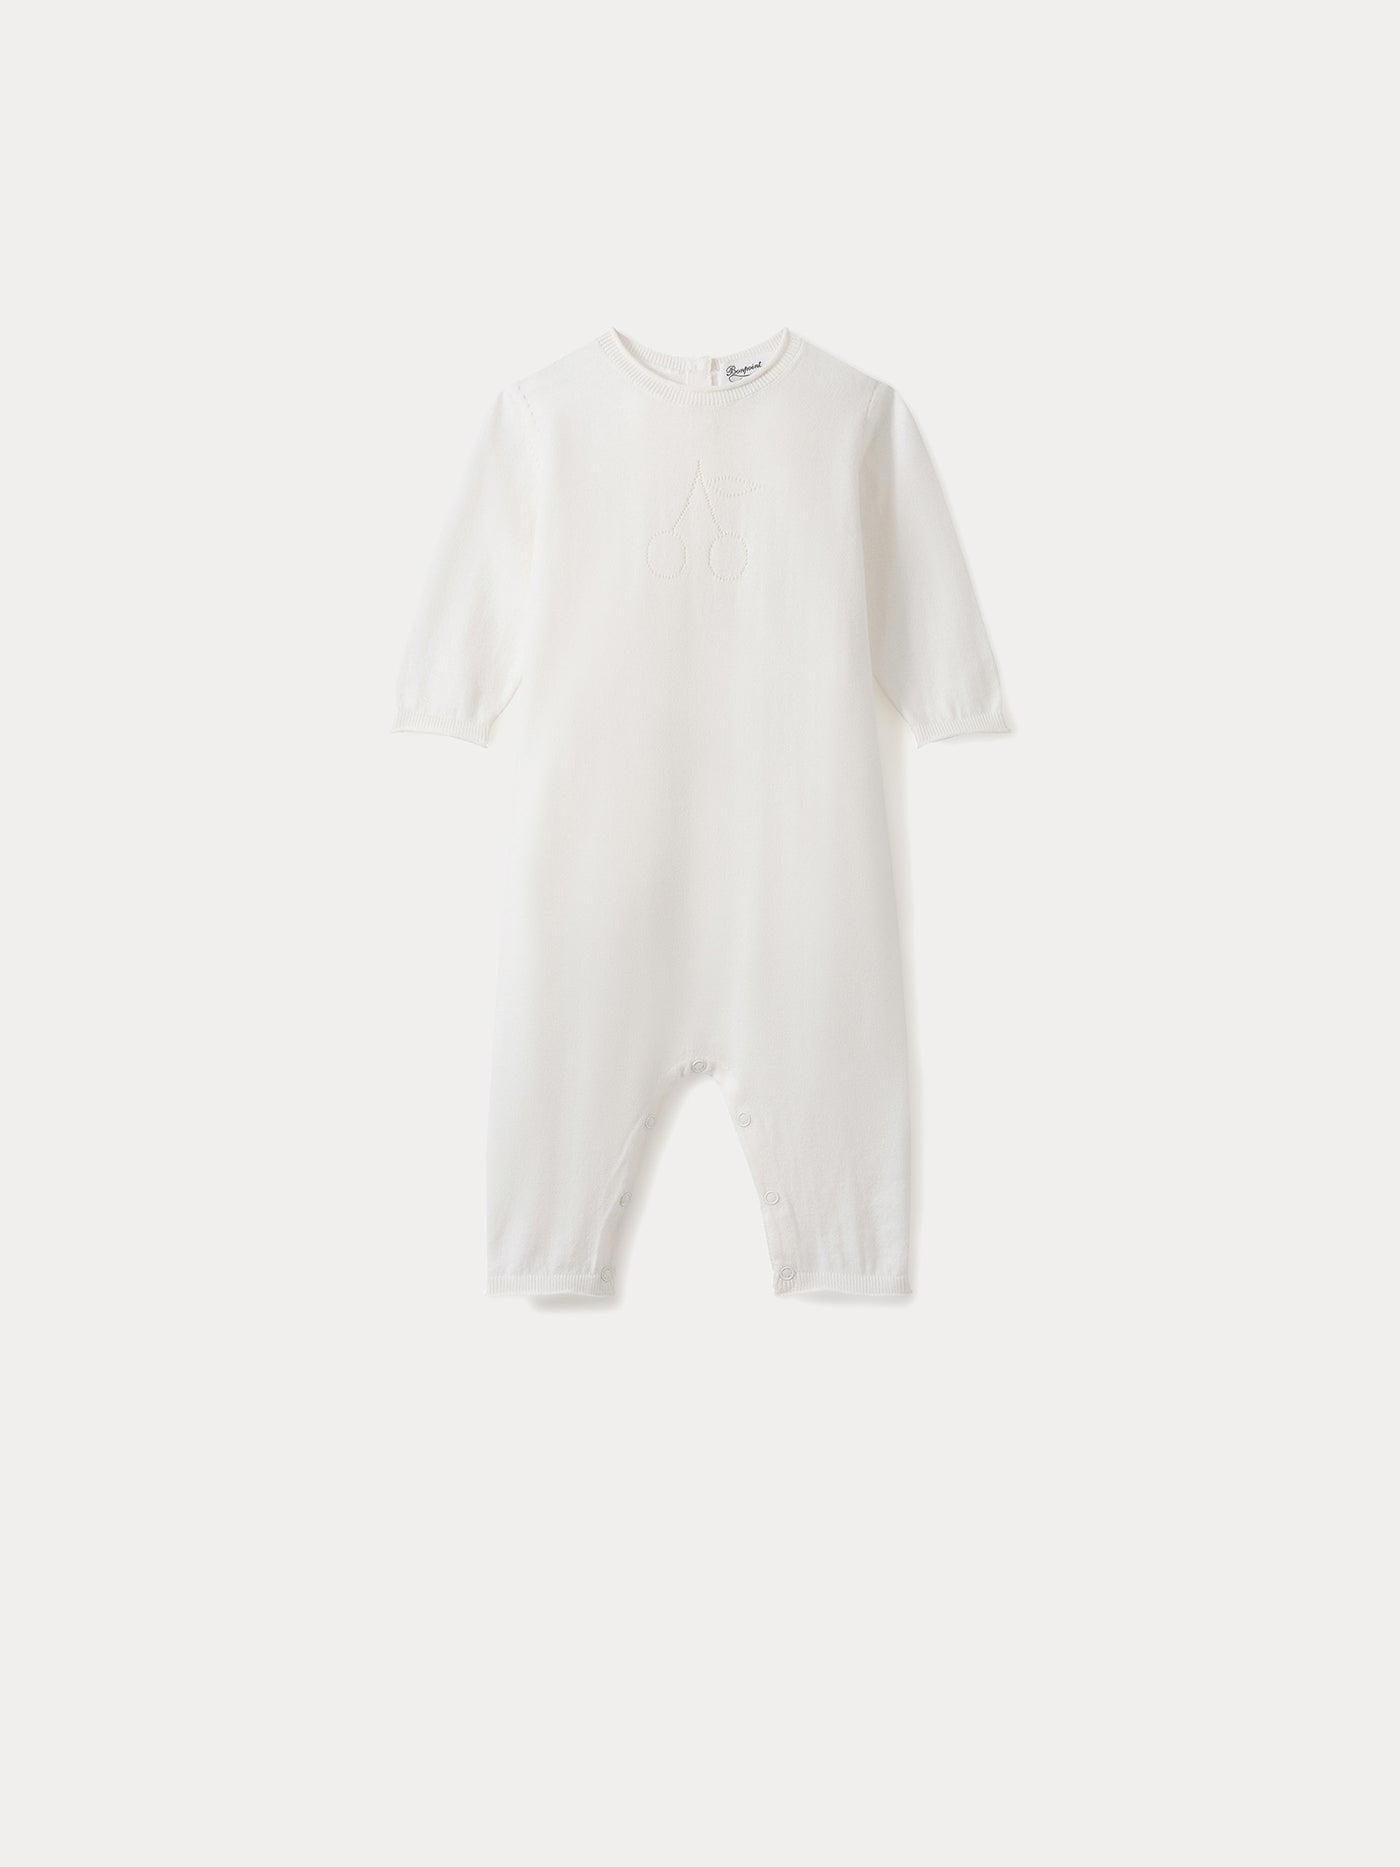 Babies' sleepsuit milk white